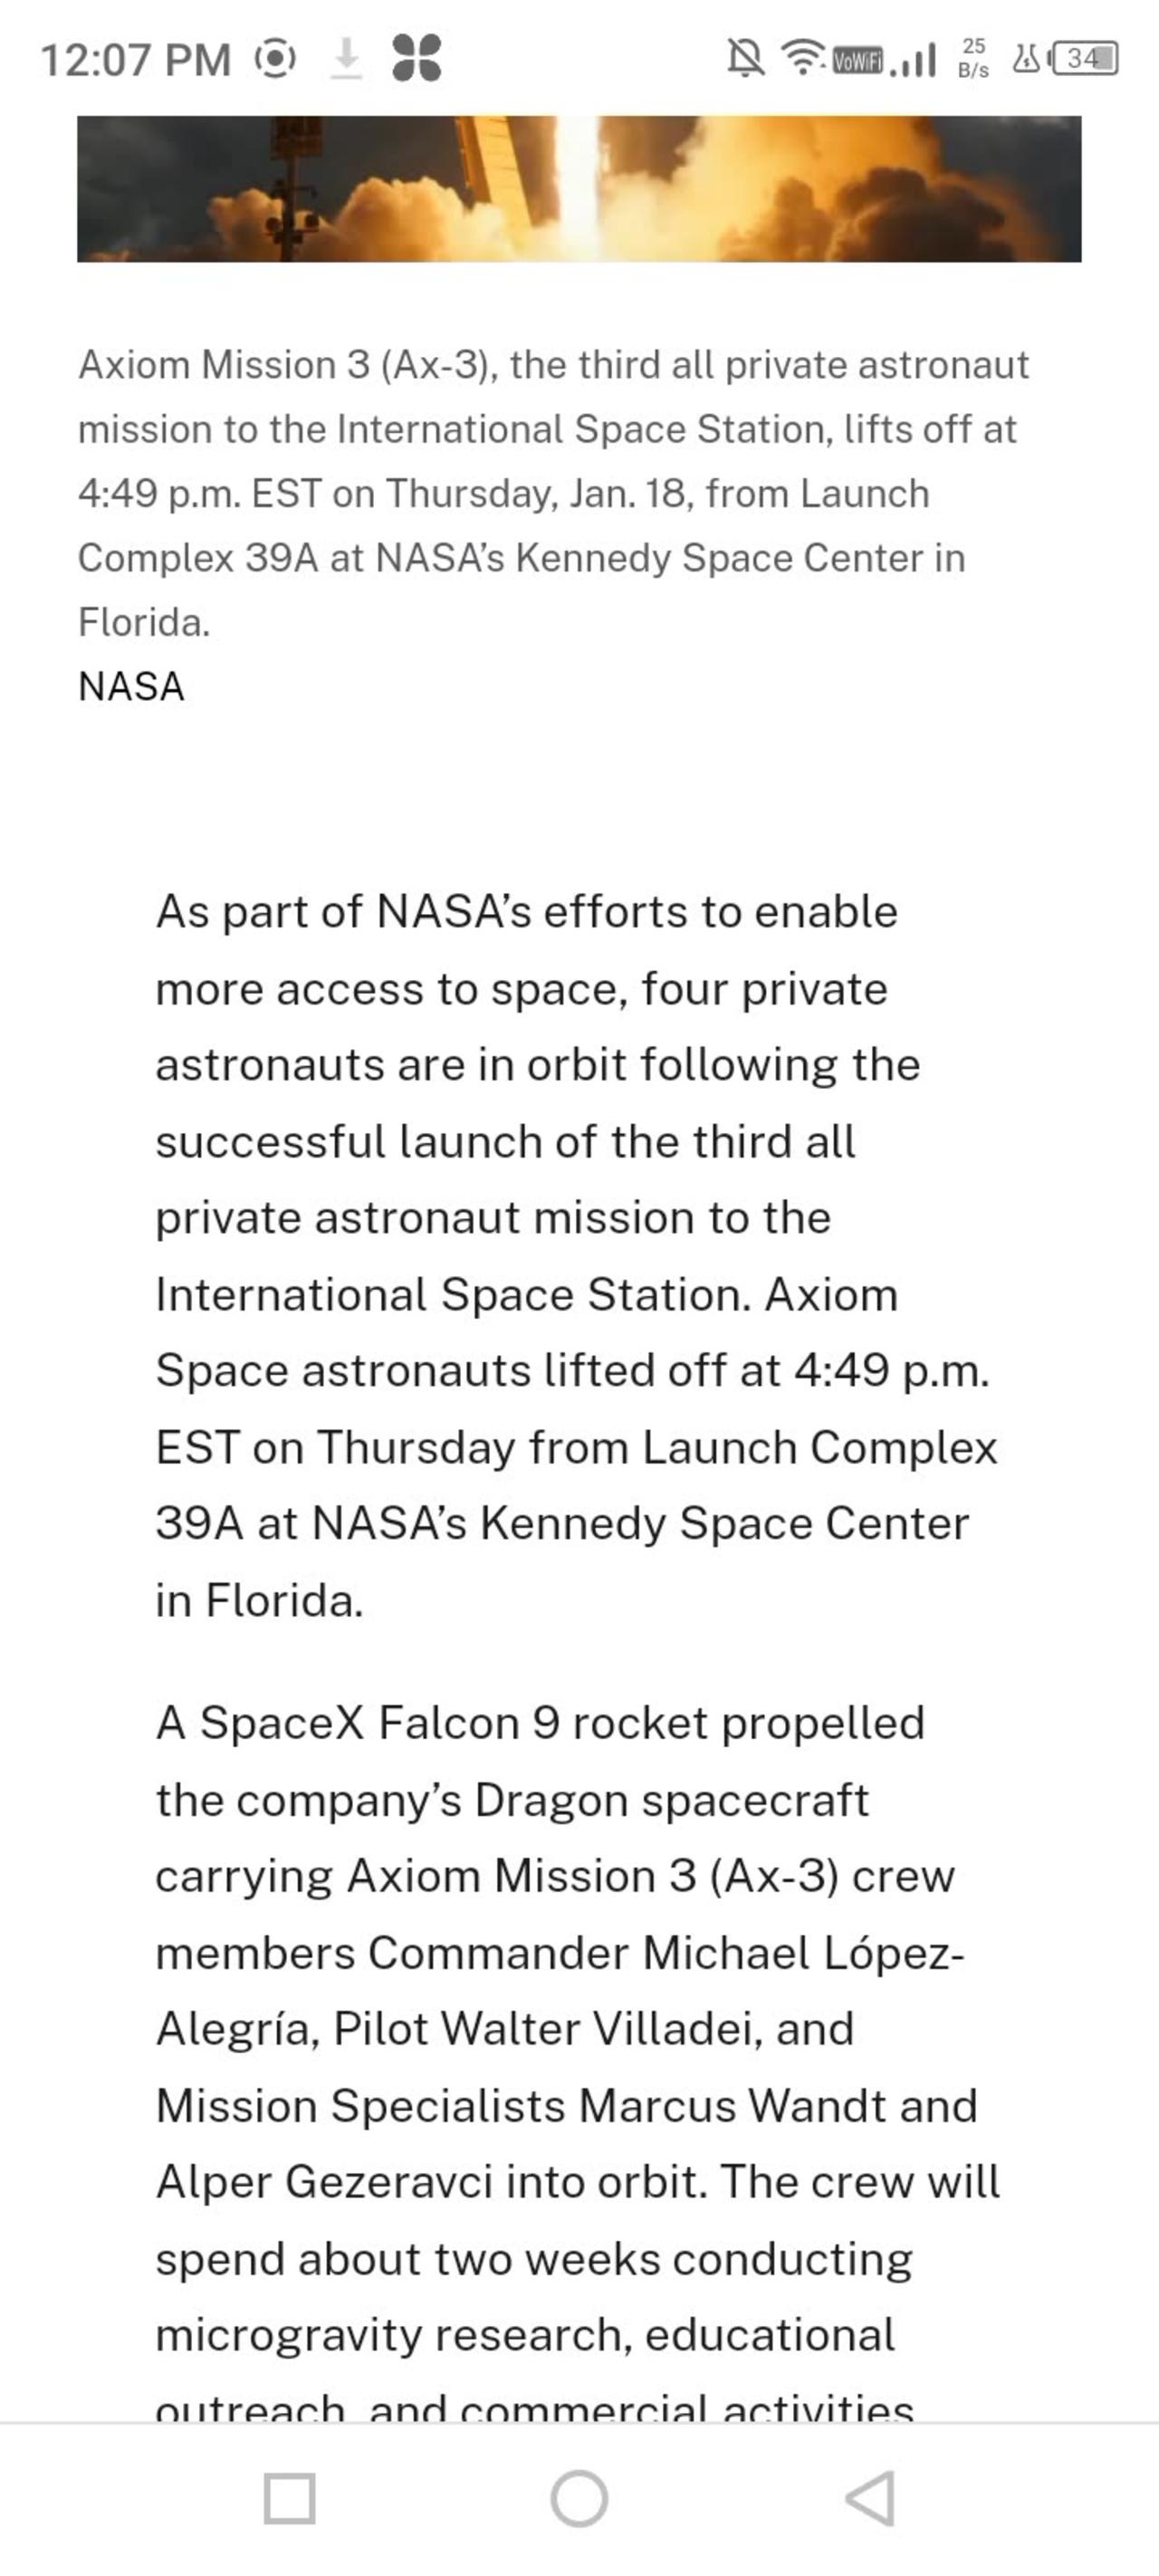 Nasa's Axiom3 mission launch